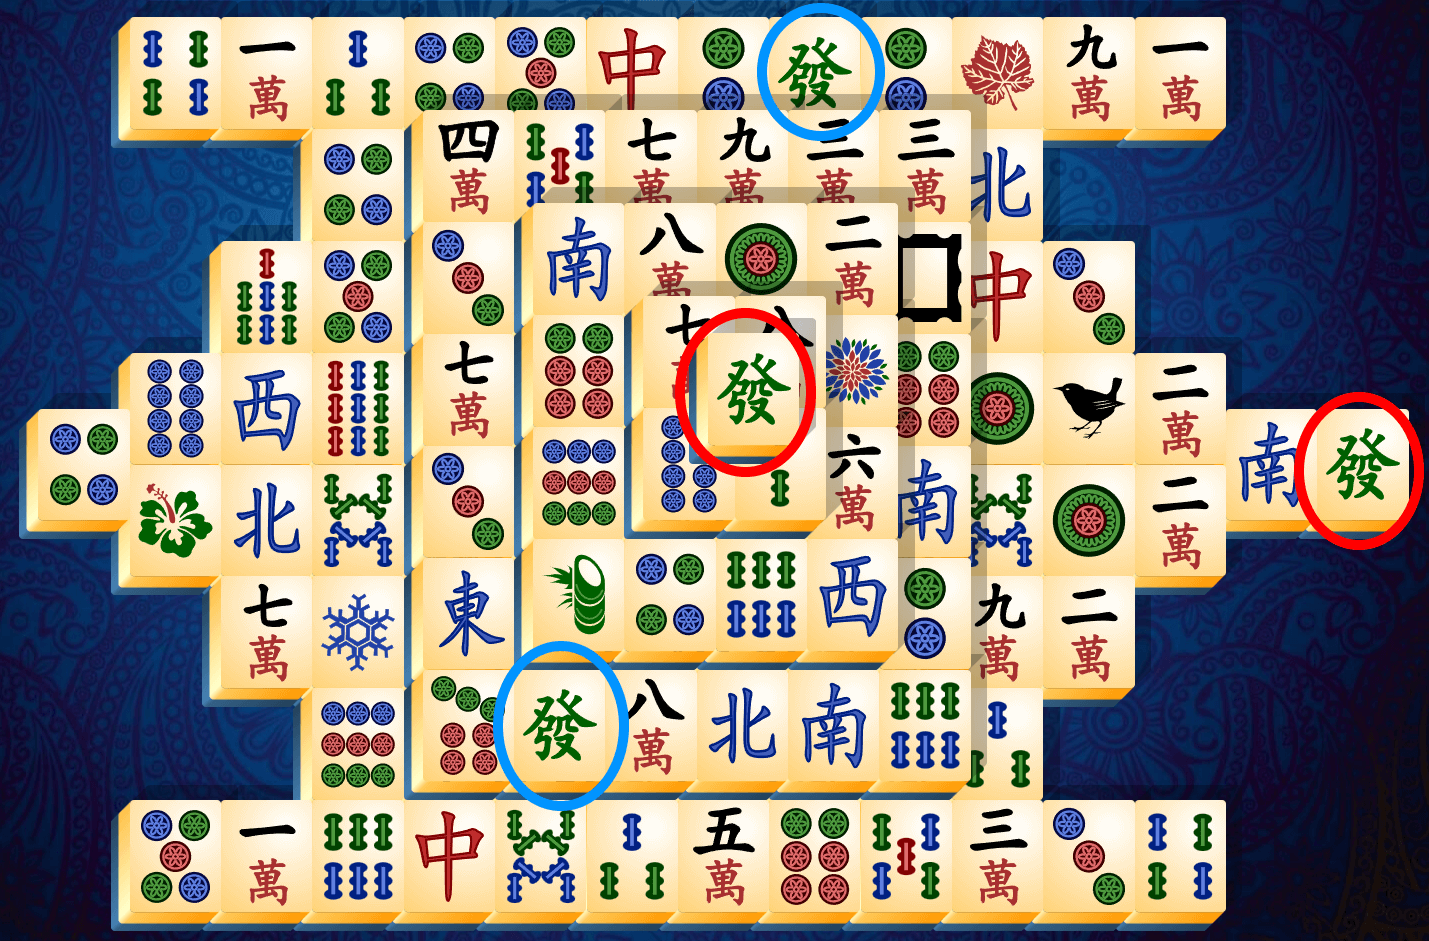 Tutorial de Mahjong Solitario, paso 1